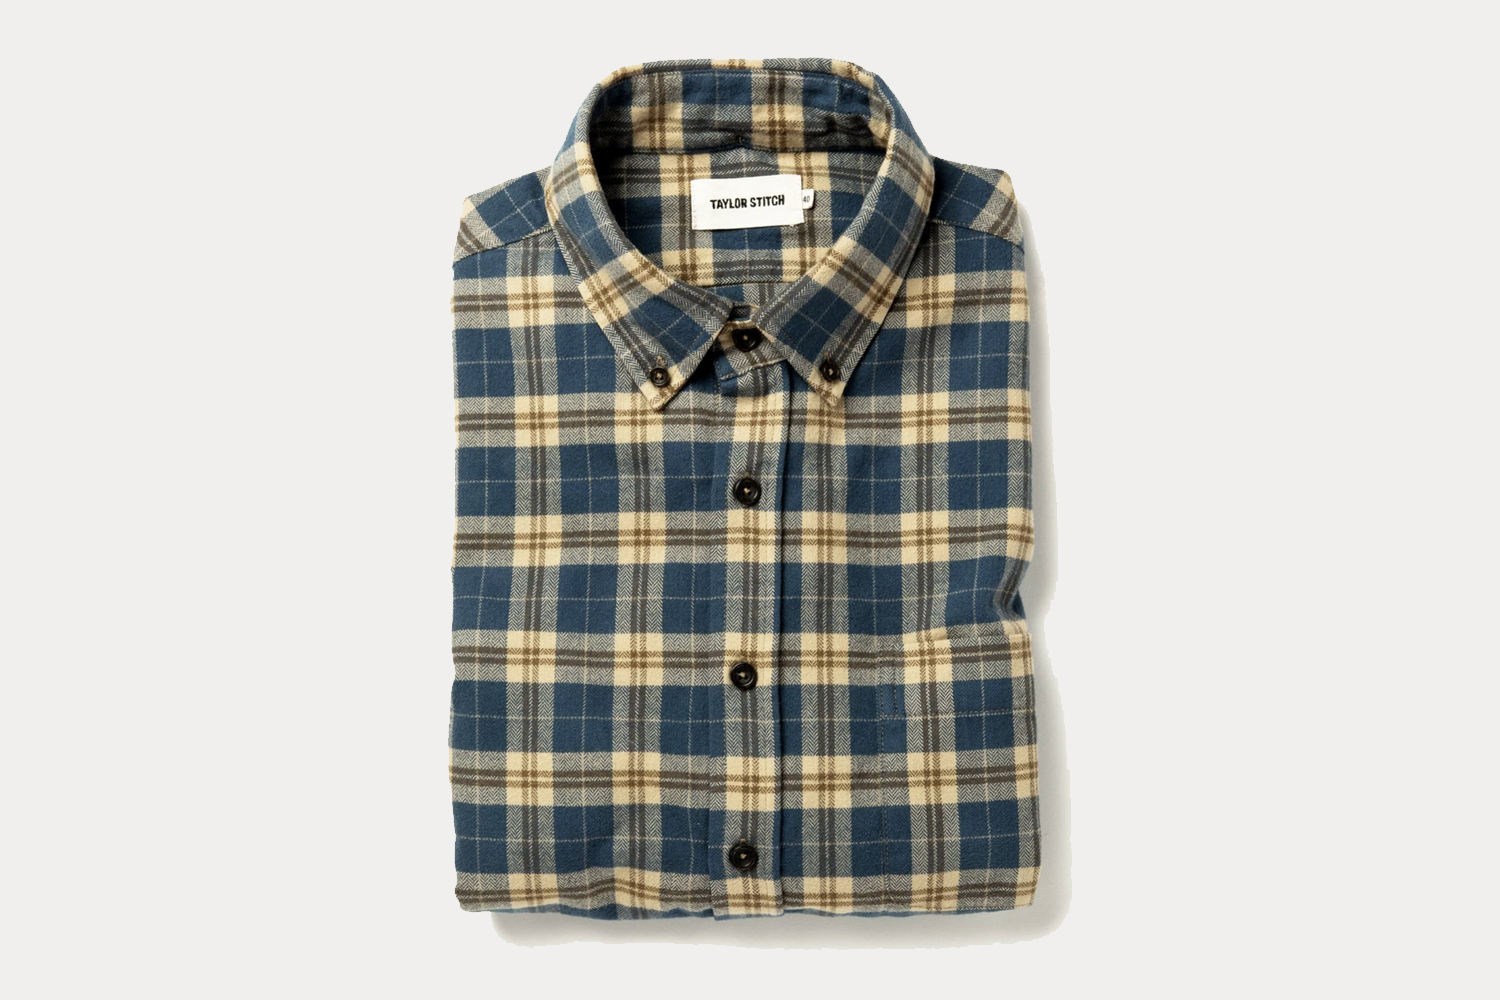 Taylor Stitch flannel shirt